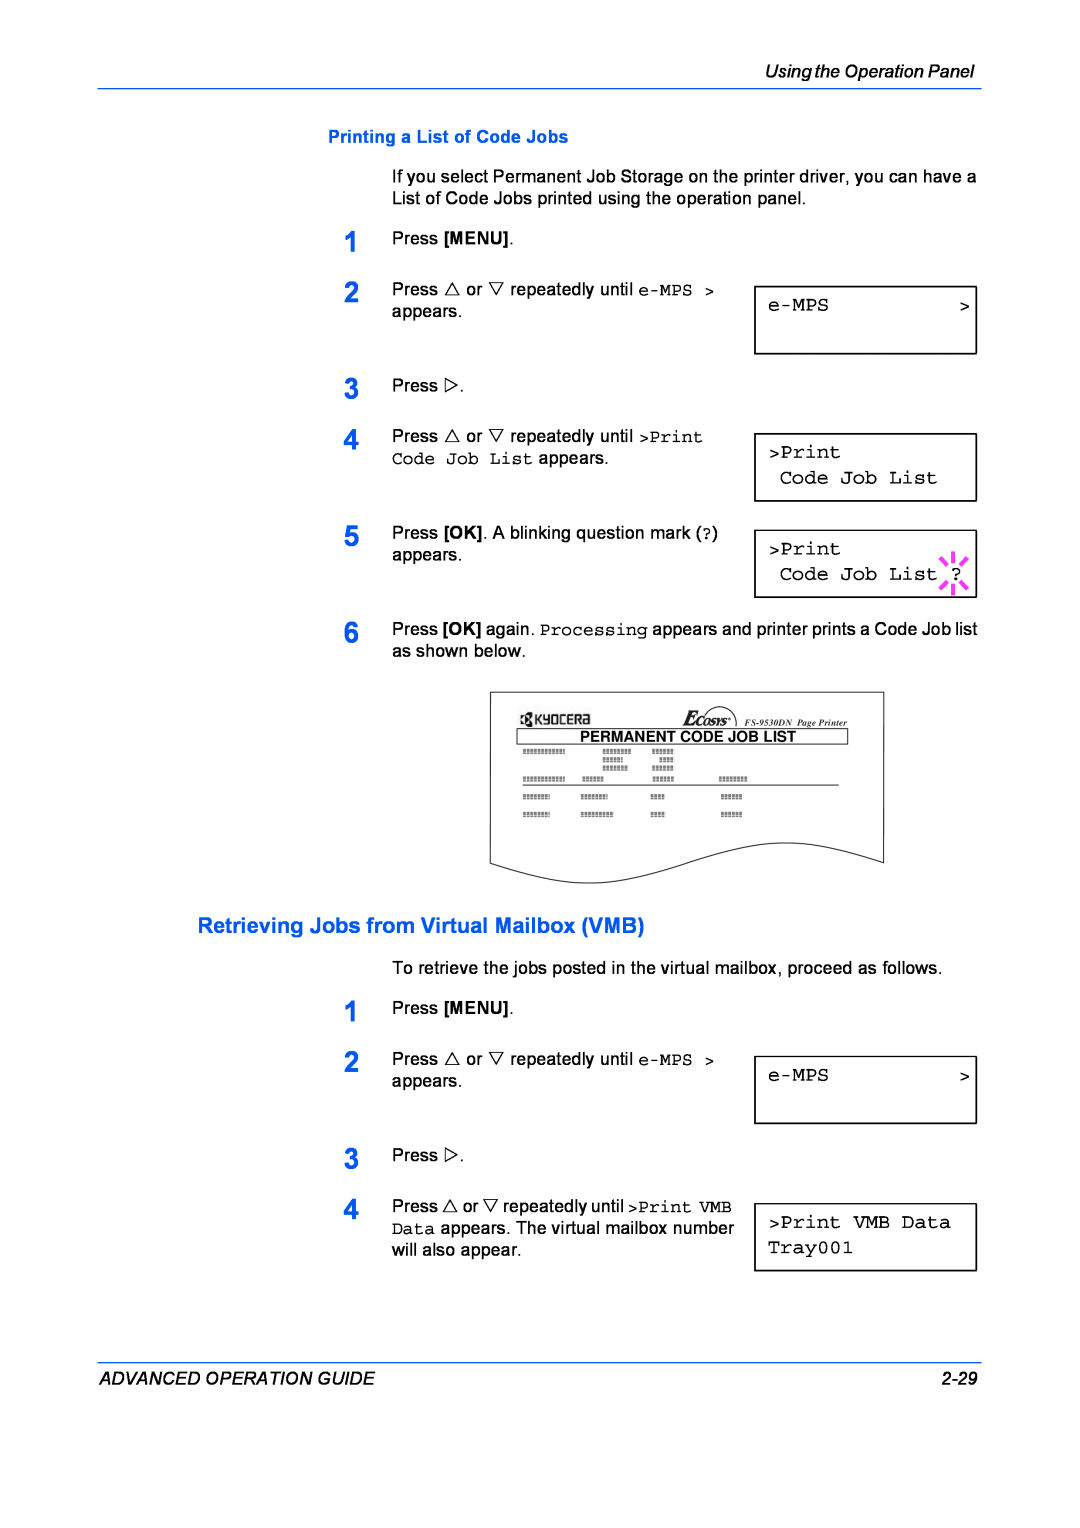 Kyocera 9530DN manual Retrieving Jobs from Virtual Mailbox VMB, e-MPS Print Code Job List Print Code Job List ? 